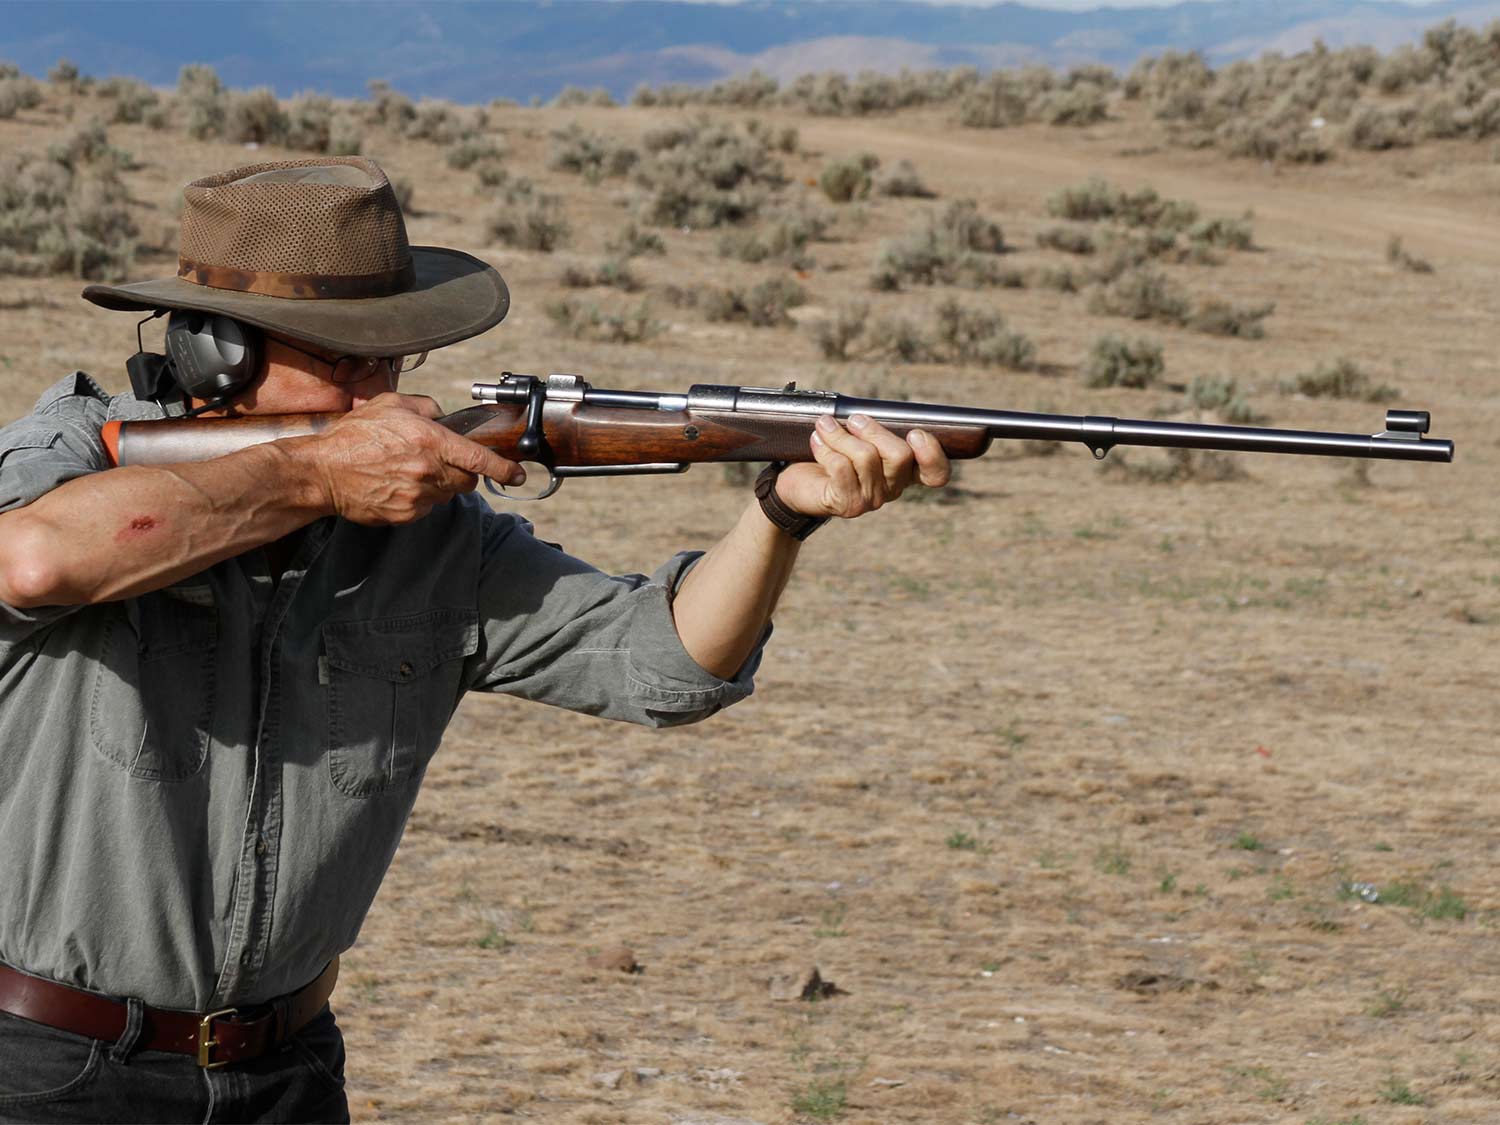 A hunter aims a rifle on an African plain.